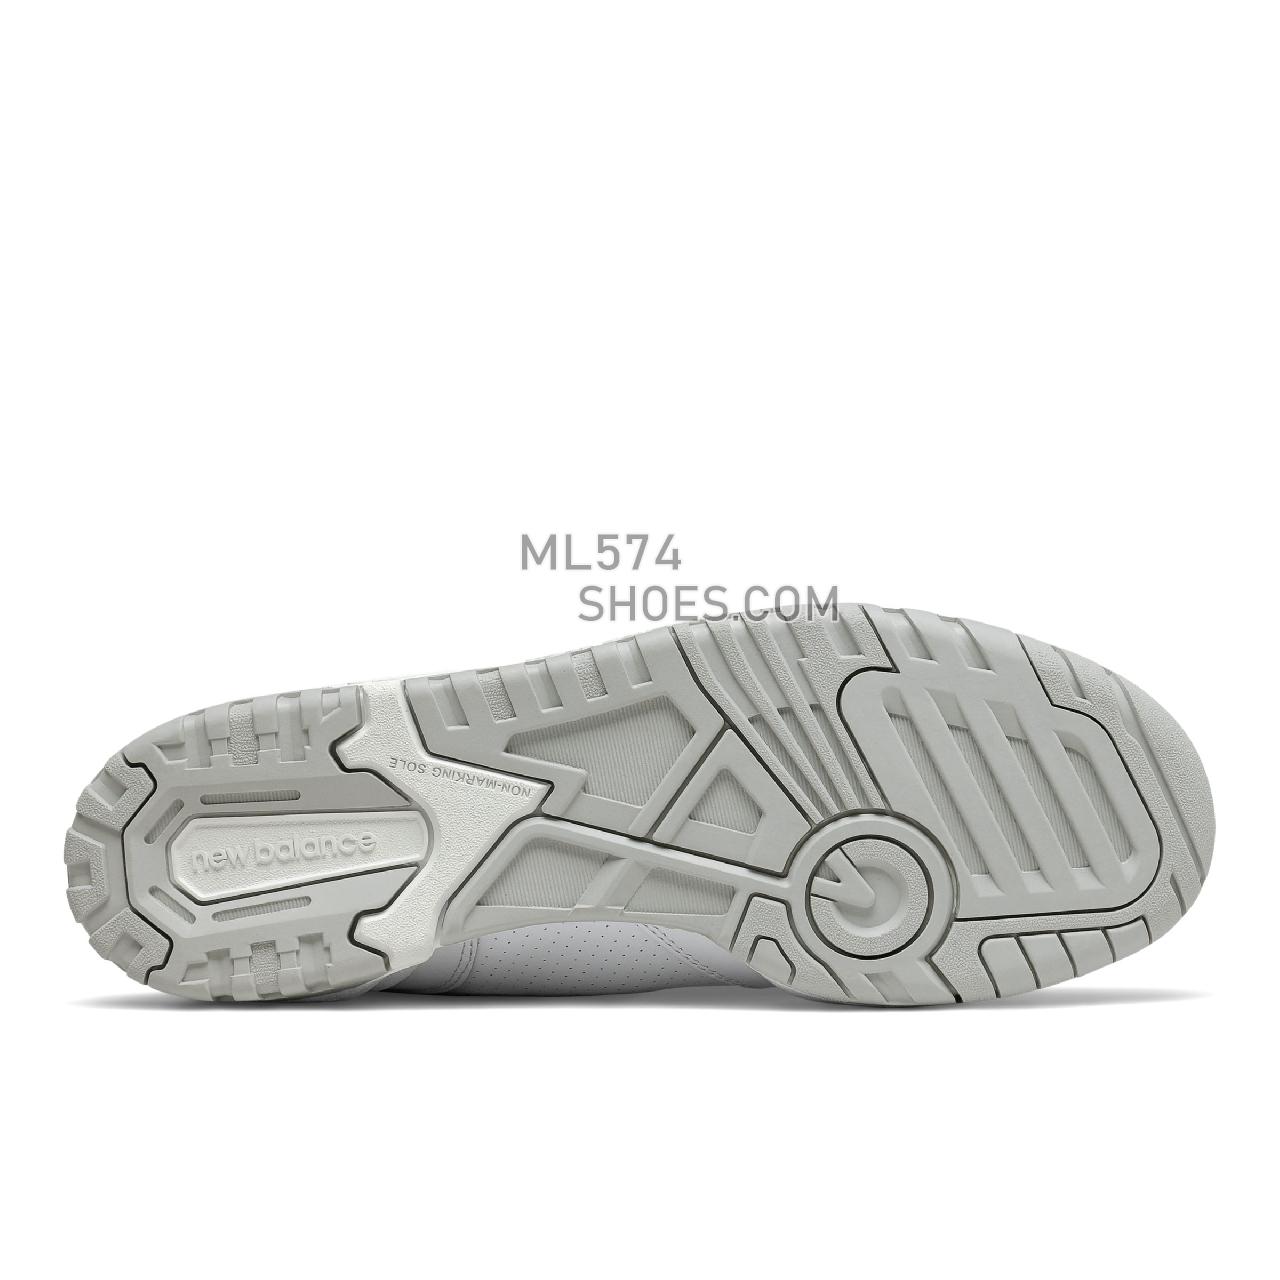 New Balance 550 - Men's Sport Style Sneakers - White - BB550PB1